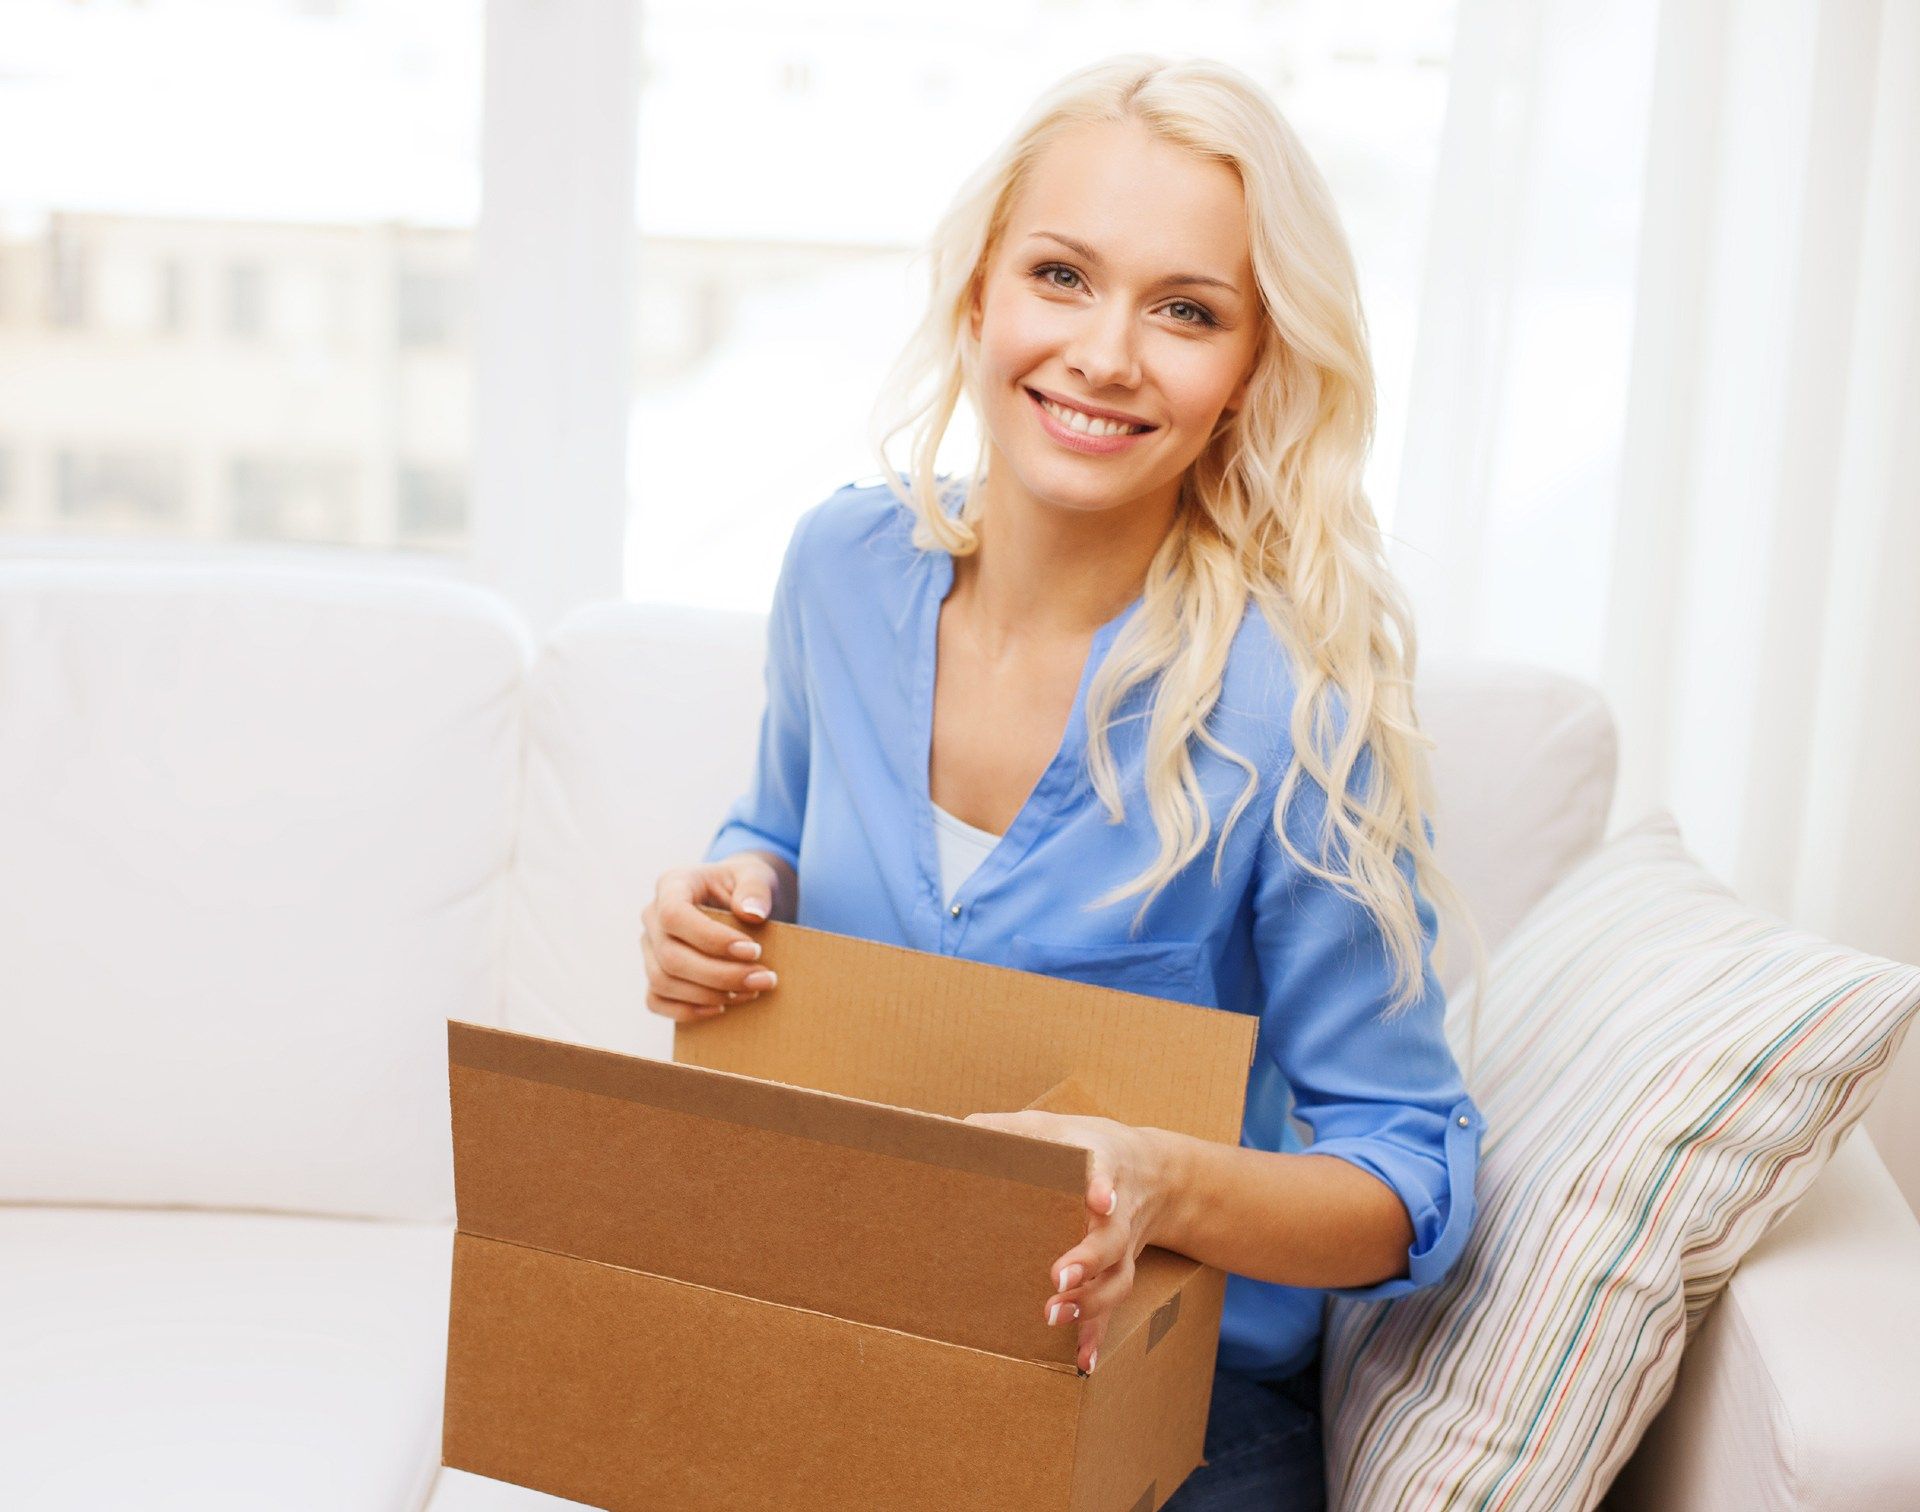 A smiling blonde woman opens a cardboard box while sitting on a sofa - fabfitfun